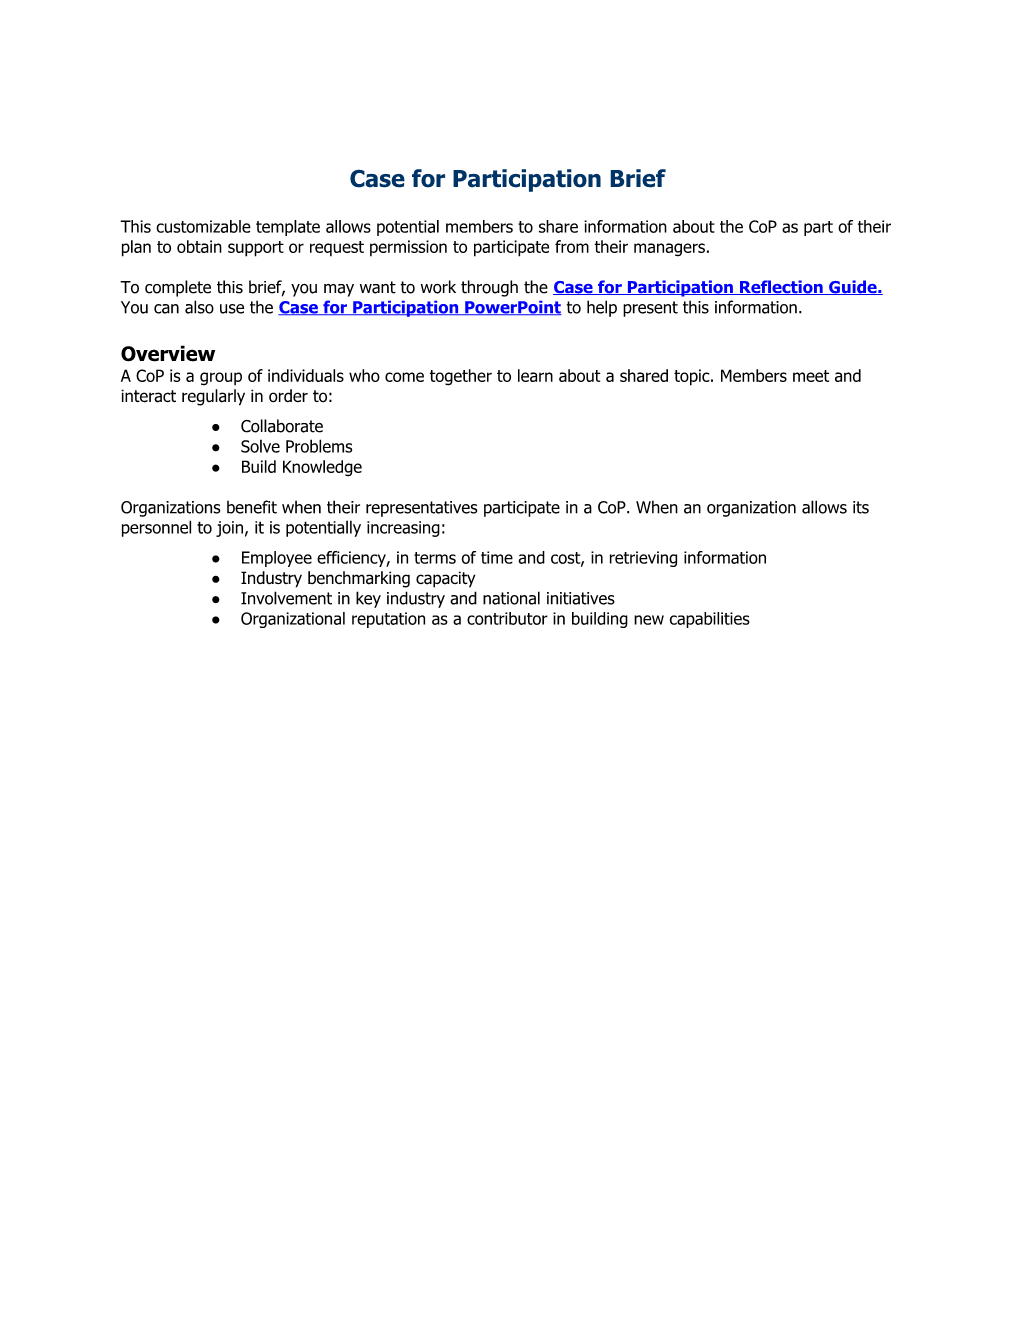 Case for Participation Brief